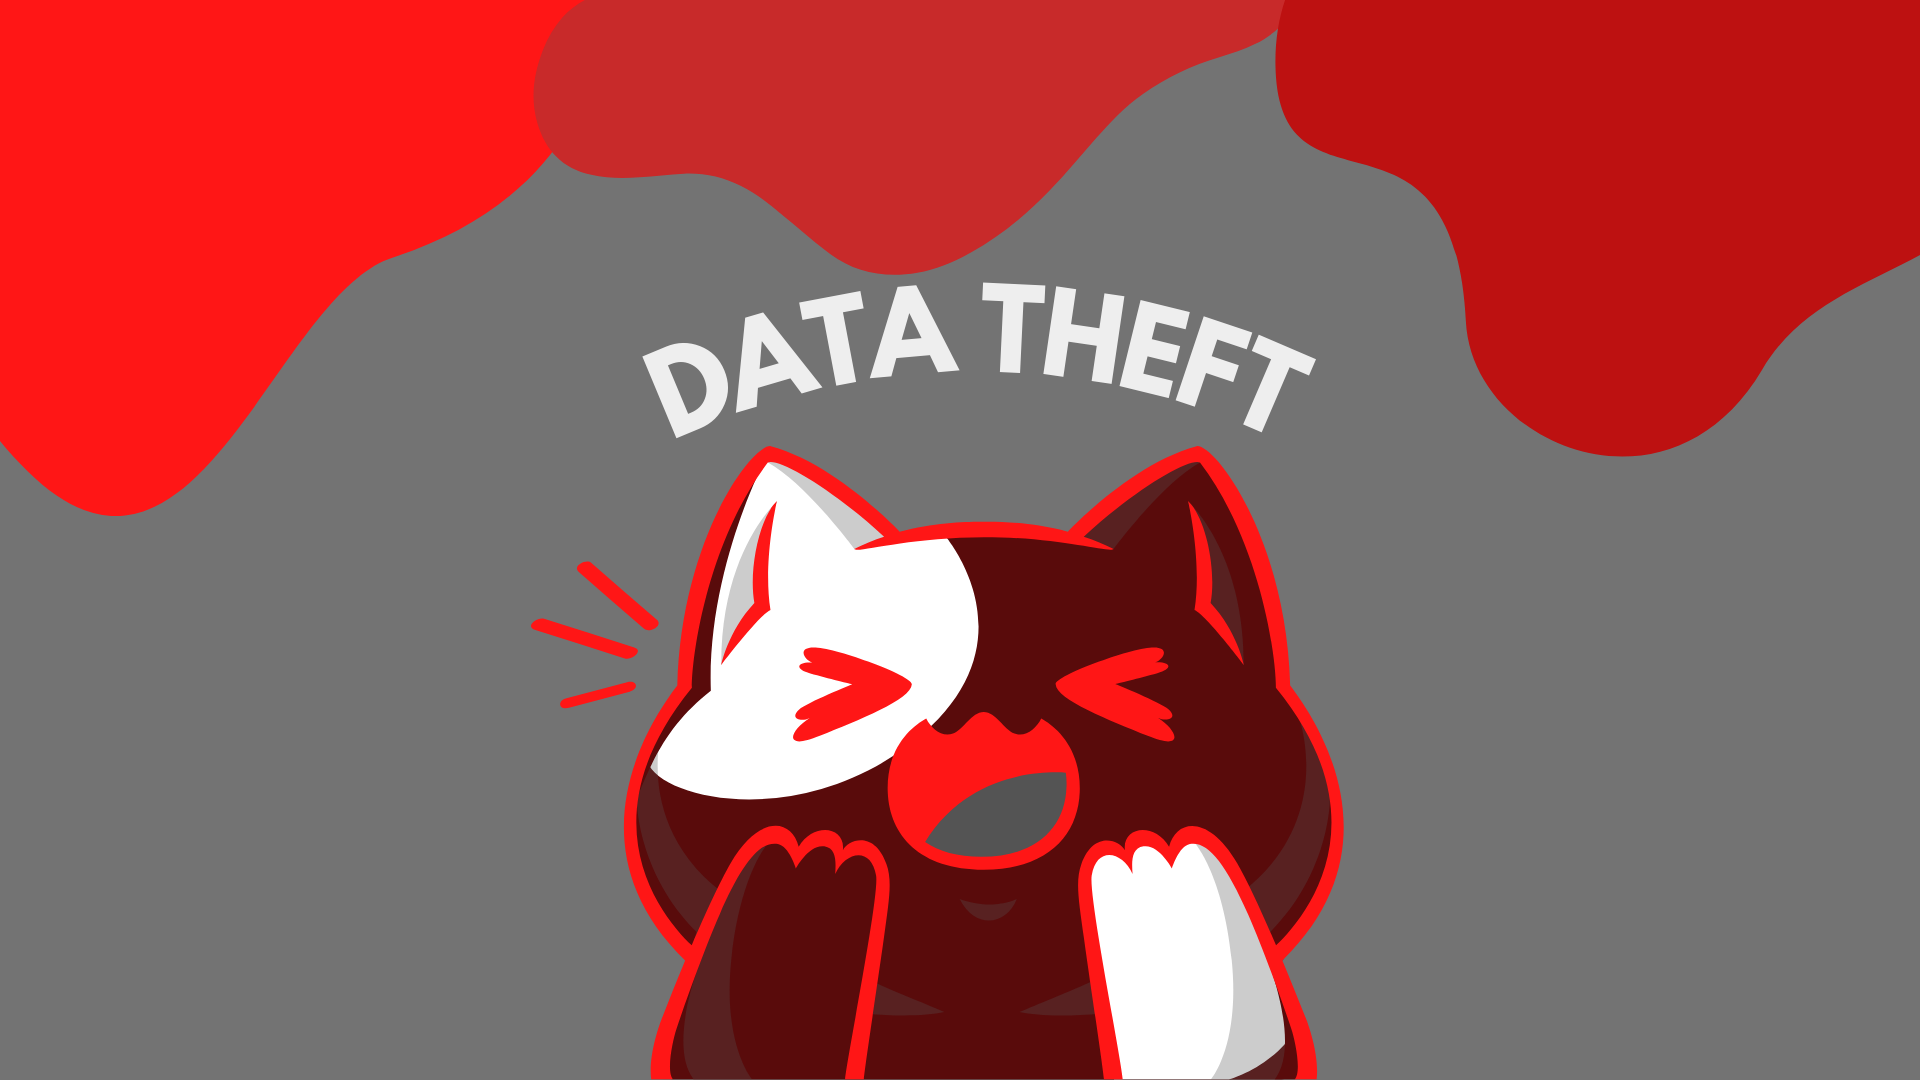 commit data theft